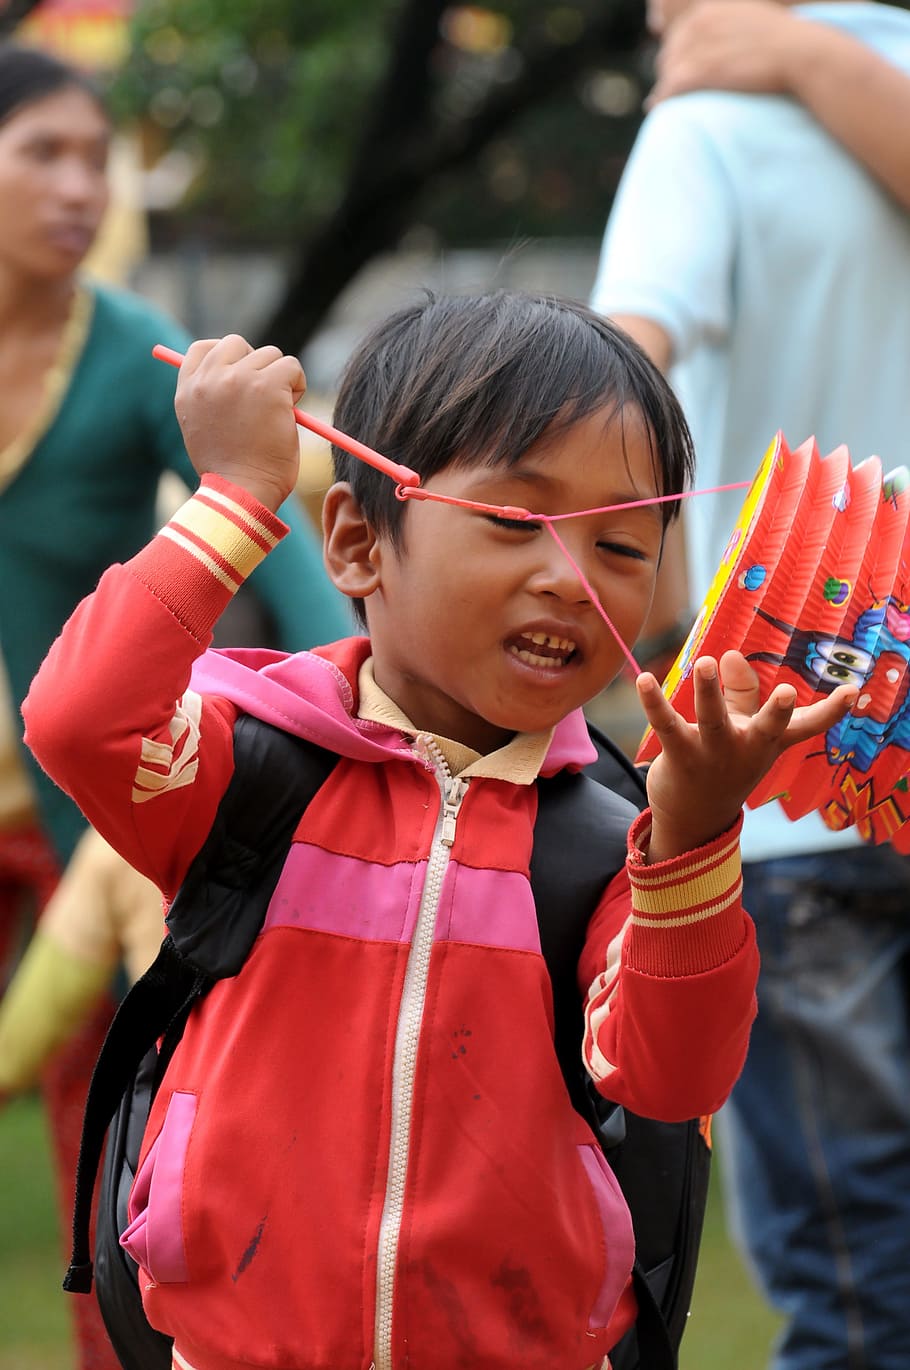 Ethnic Minorities, Lanterns, presents, gift, toy, kids, family pass north, vietnam, child, childhood